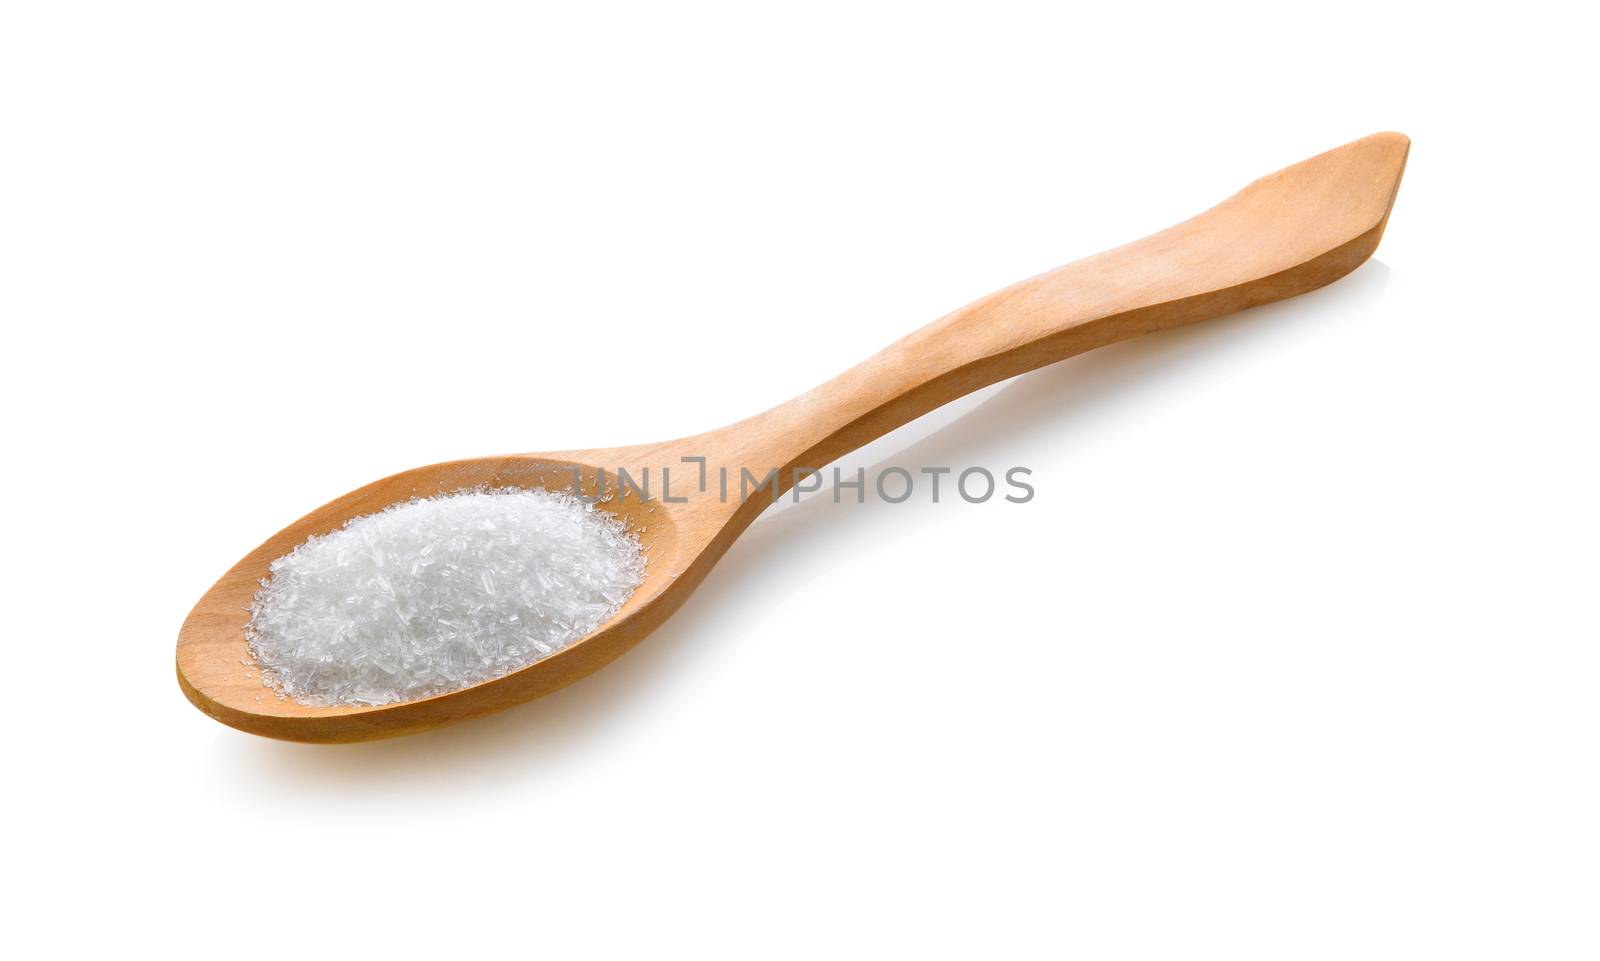 monosodium glutamate in wood spoon on white background